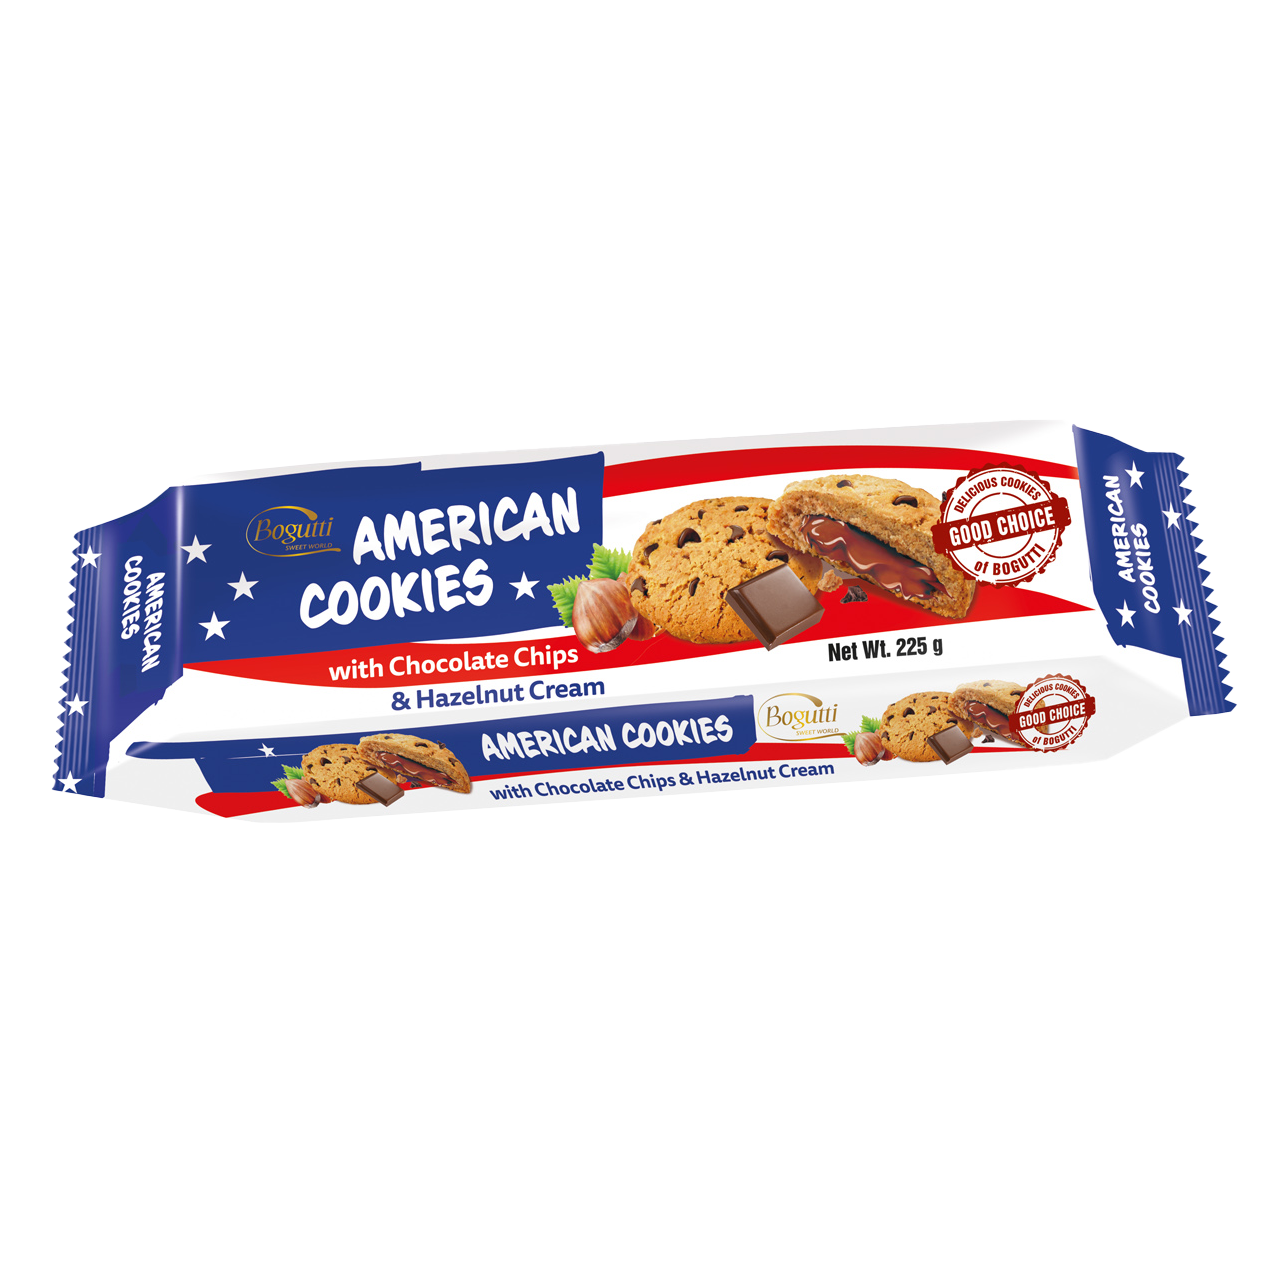 Cookies in American Style – Knusprige Kekse mit Schokolade und Nusscreme